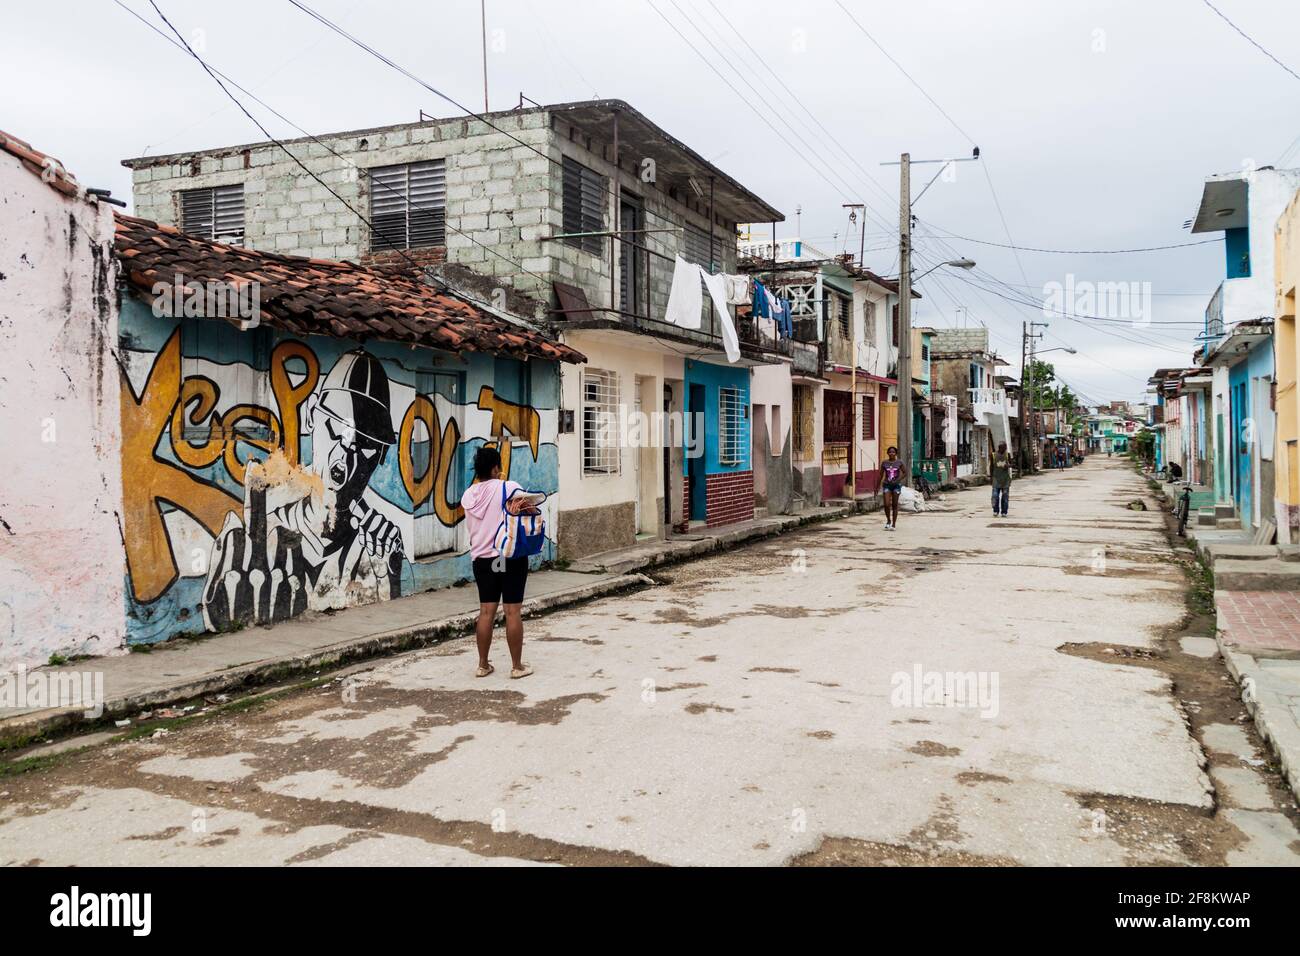 SANCTI SPIRITUS, CUBA - FEB 7, 2016: Street with colorful houses in Sancti Spiritus, Cuba Stock Photo